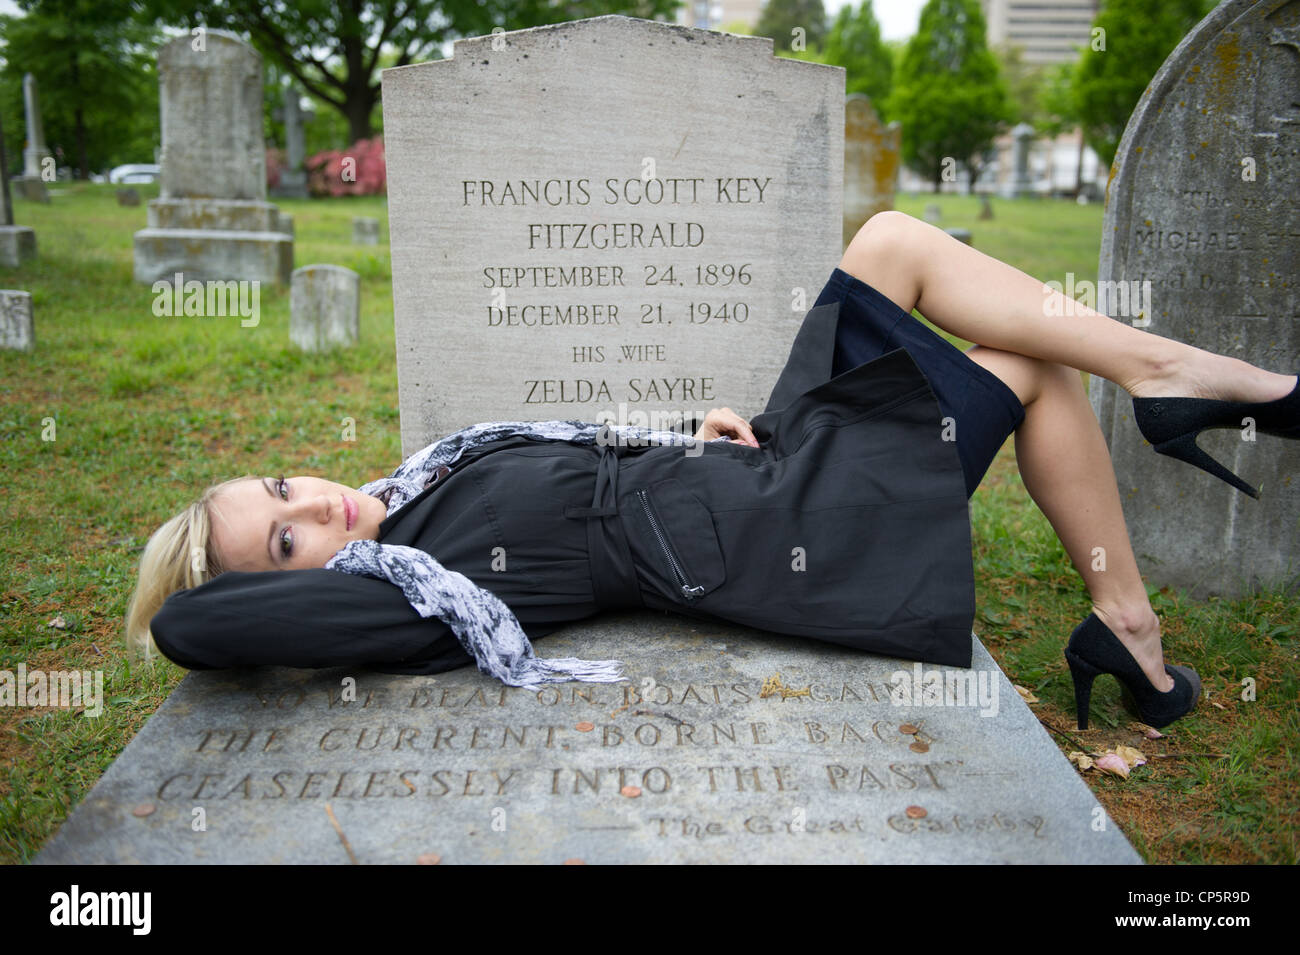 Pushing up the Daisy - Blonde woman at F.Scott Fitzgerald Gravesite Stock  Photo - Alamy